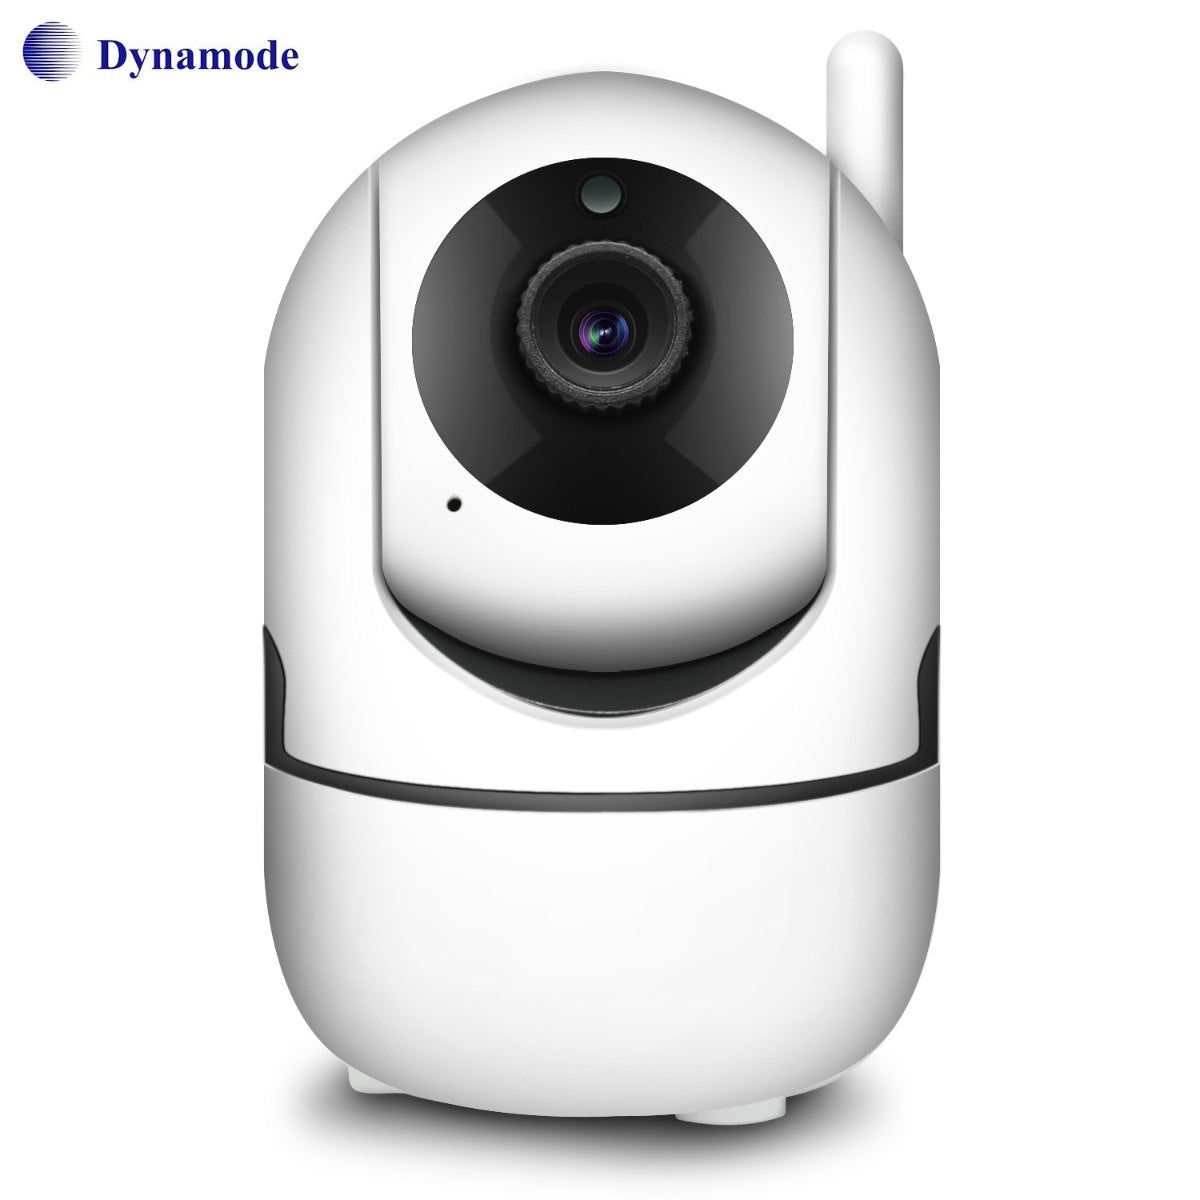 Dynamod 360 degree wide-angle camera